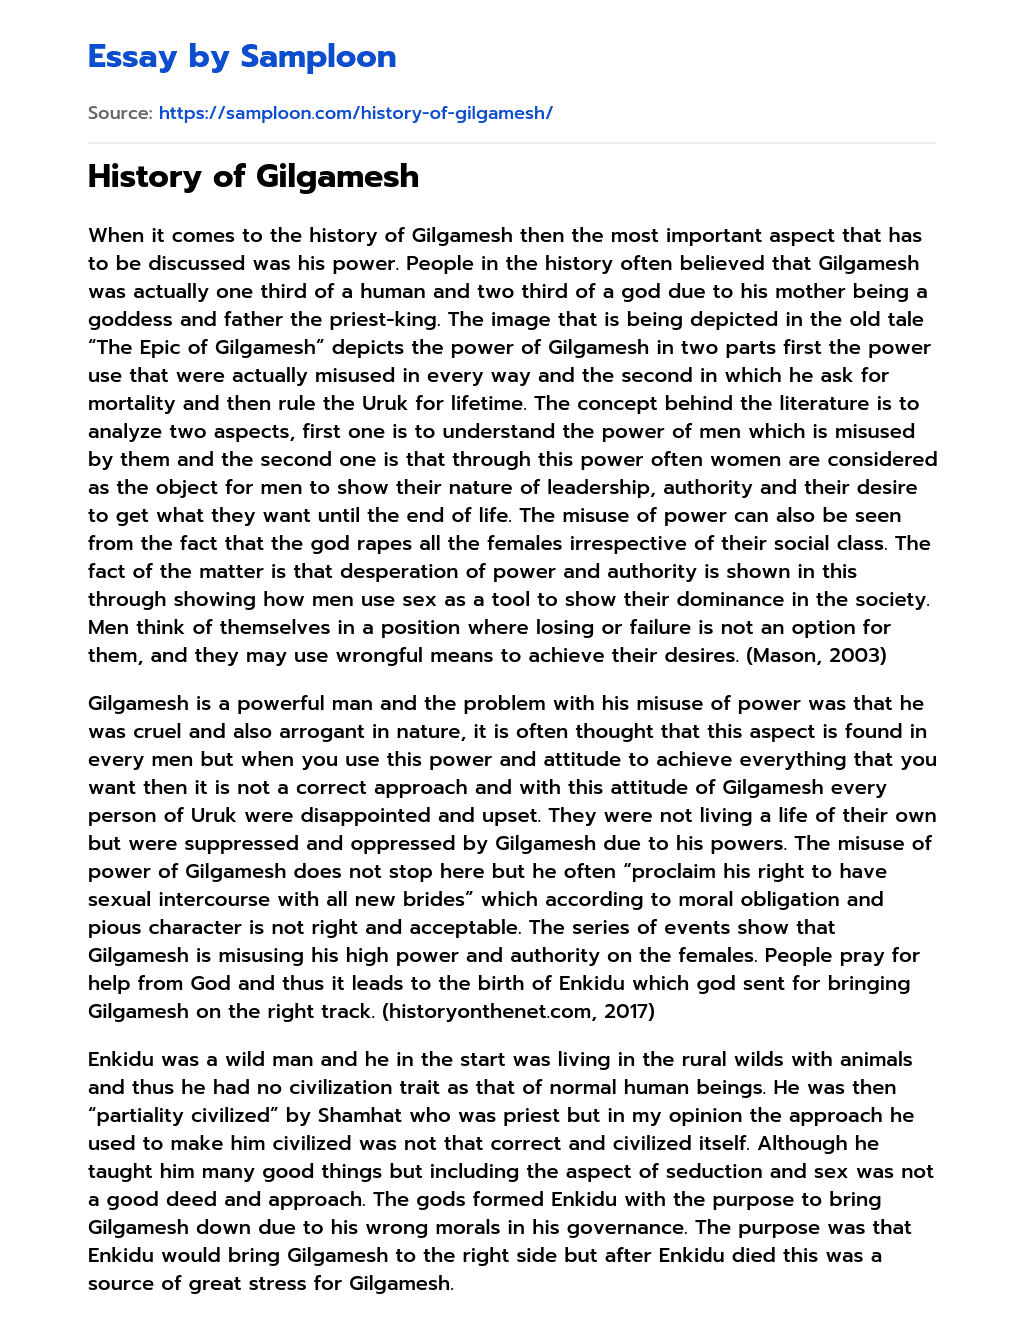 History of Gilgamesh essay